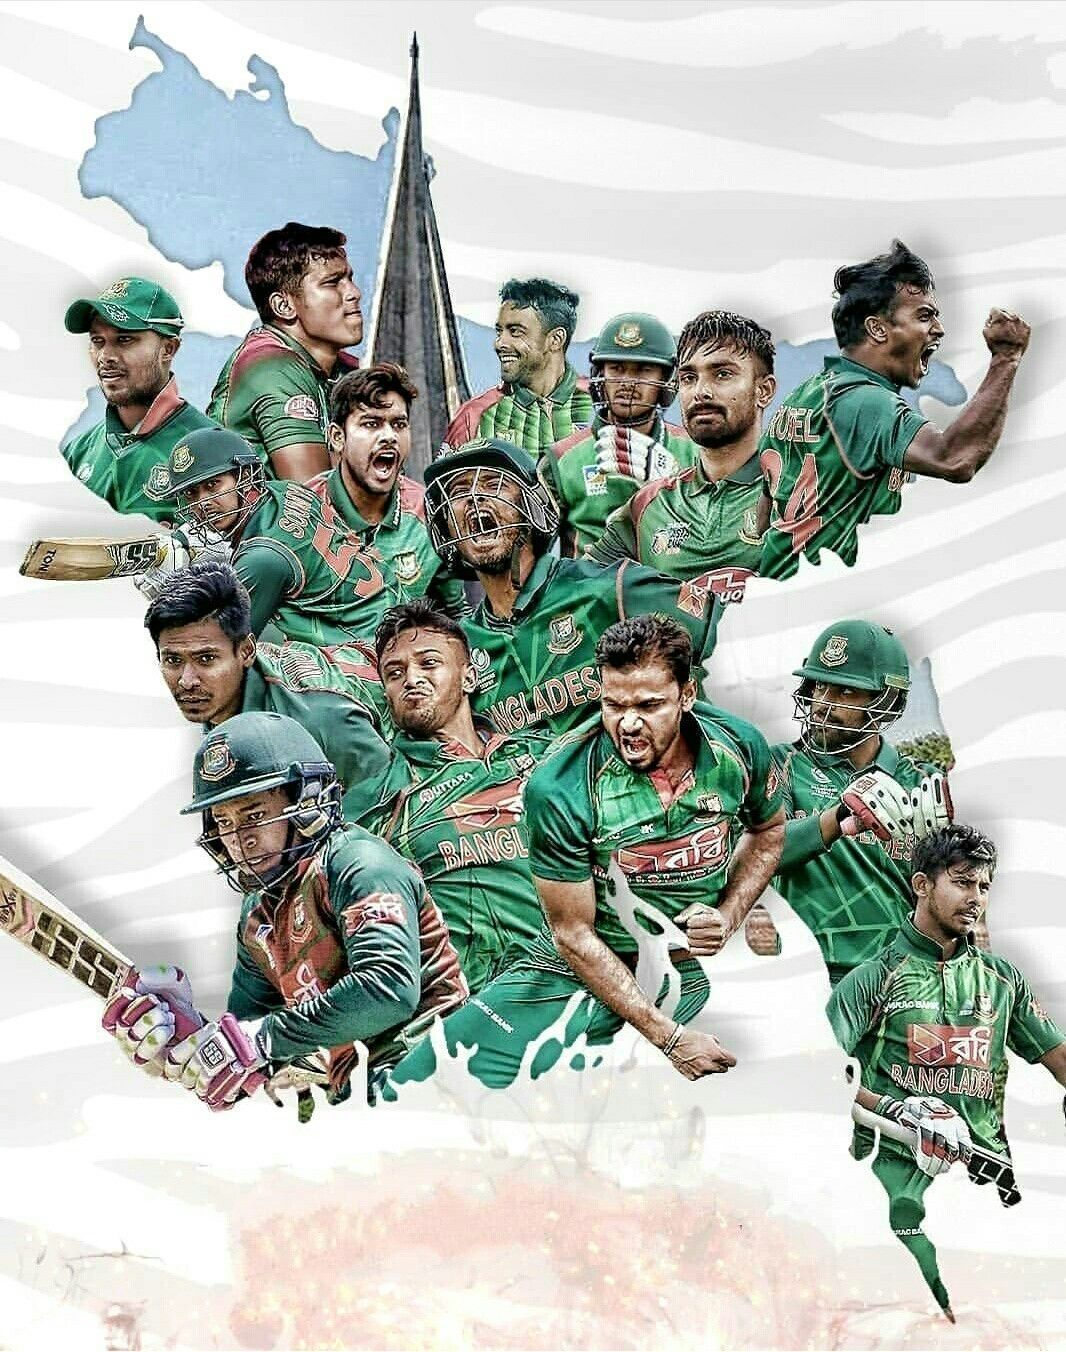 Bangladesh National Cricket Team Wallpapers Wallpaper Cave